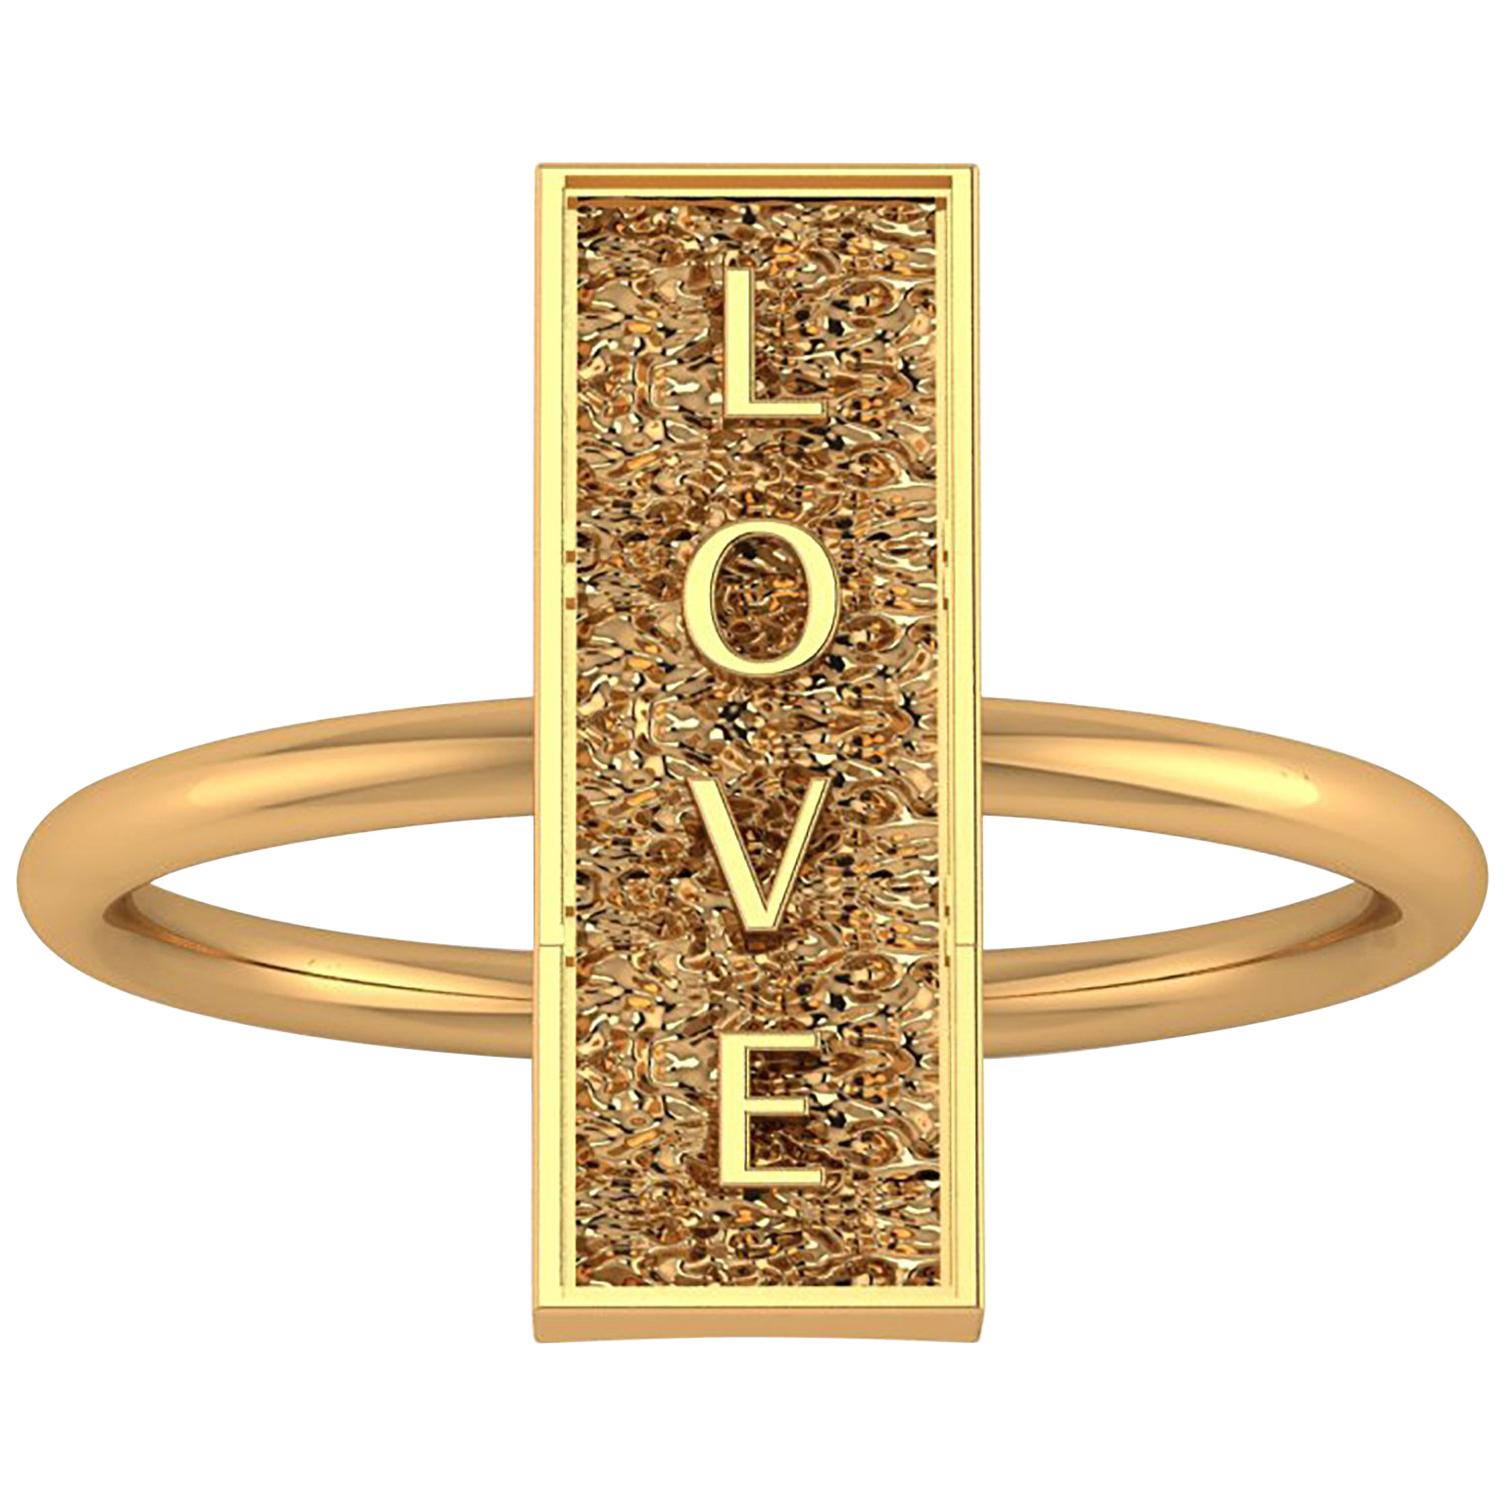 18 Karat Gold Ring Everlasting Love, geschnitzt im Berg Ferrucci